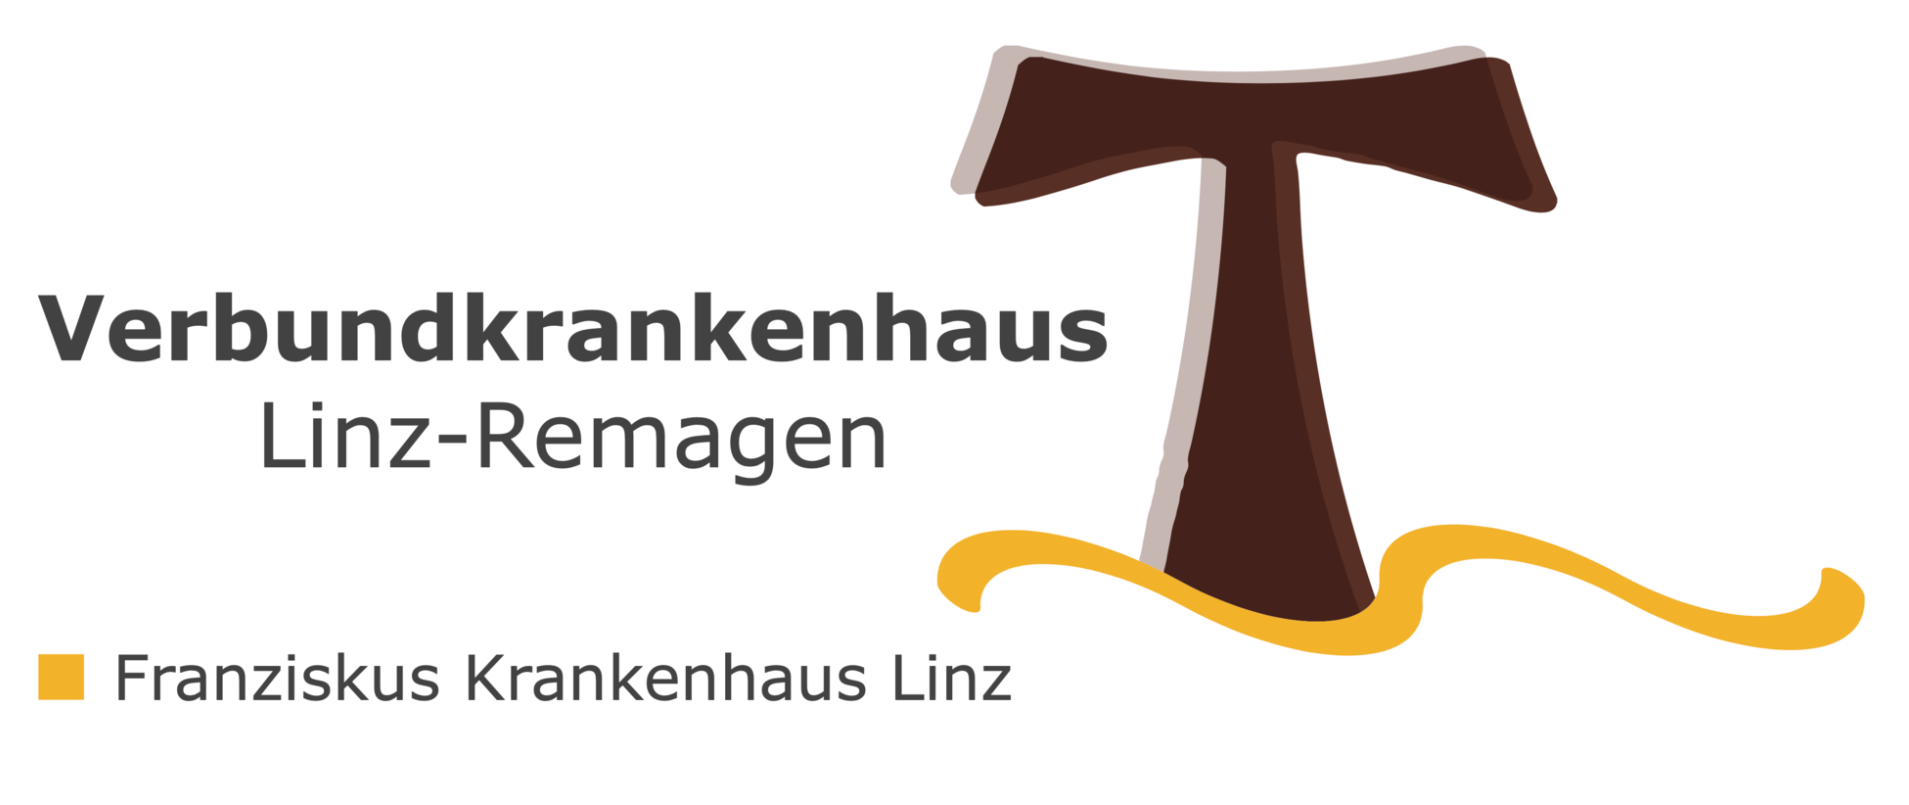 Logo des Verbundkrankenhauses Linz - Remagen